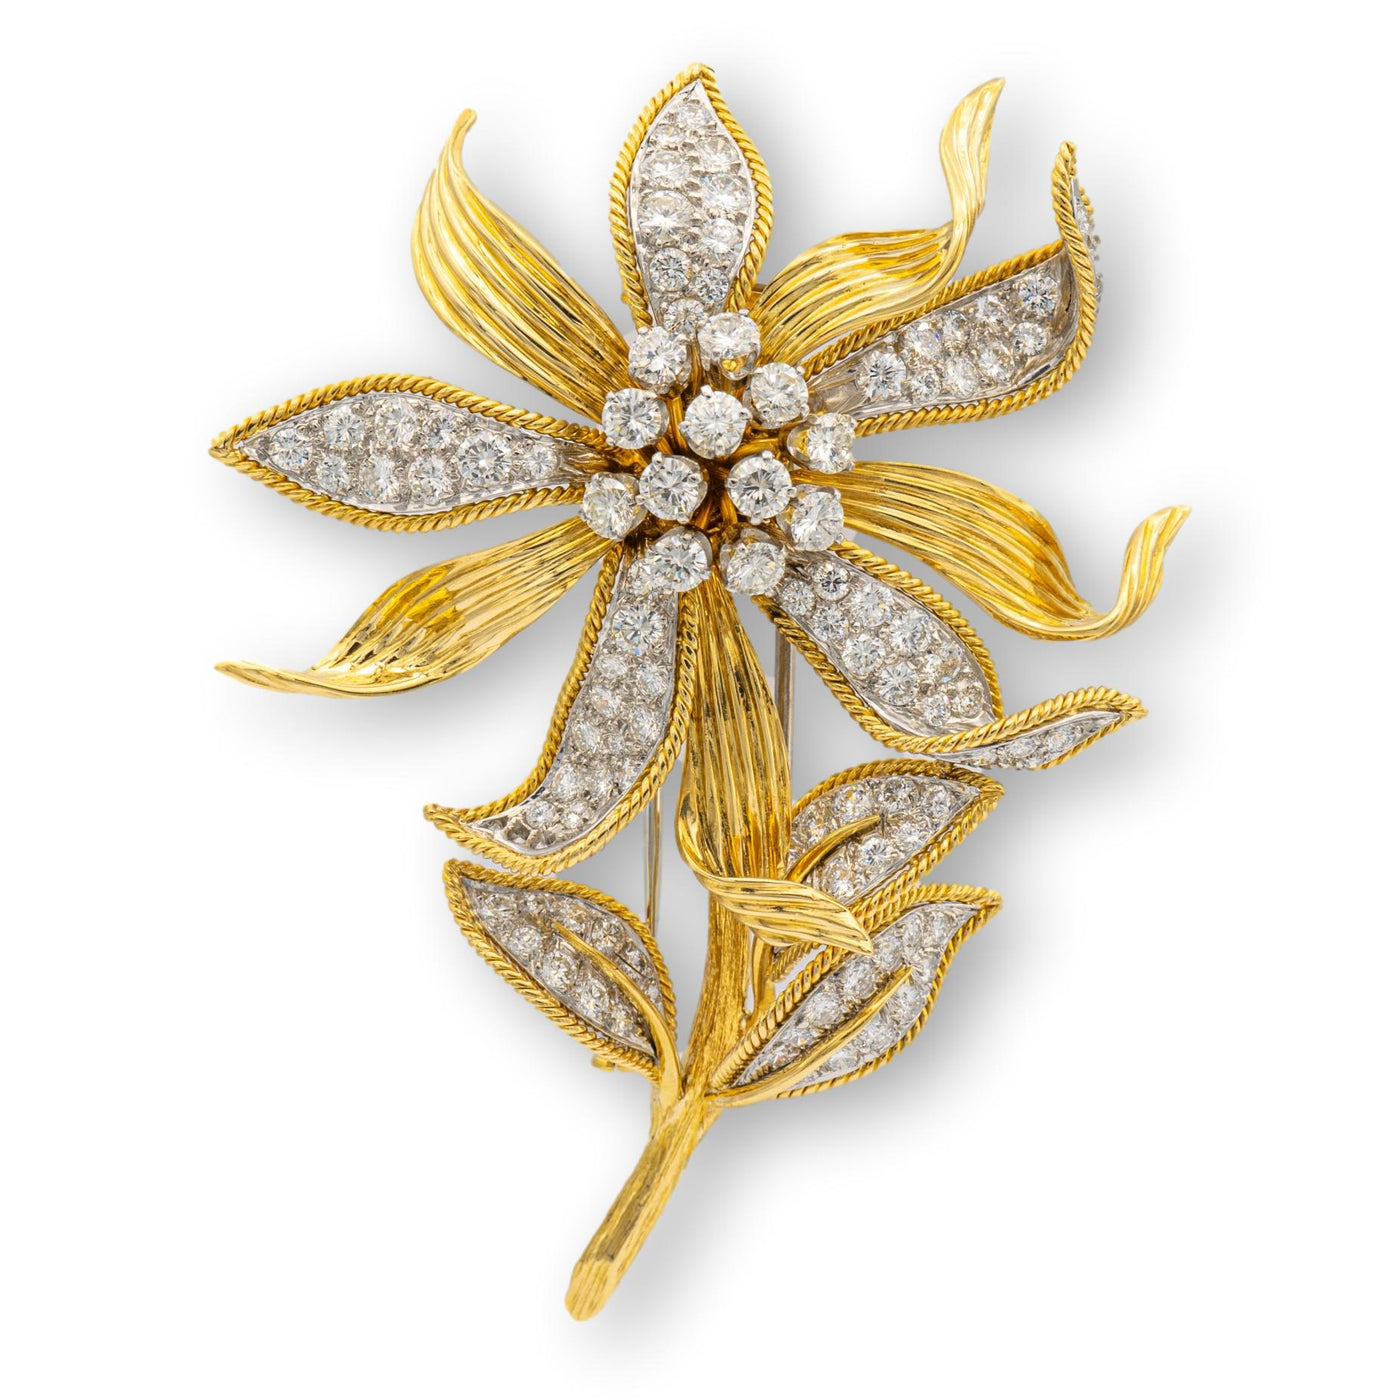 DAVID WEBB 18K YELLOW GOLD AND PLATINUM EN-TREMBLANT DIAMOND FLOWER BROOCH